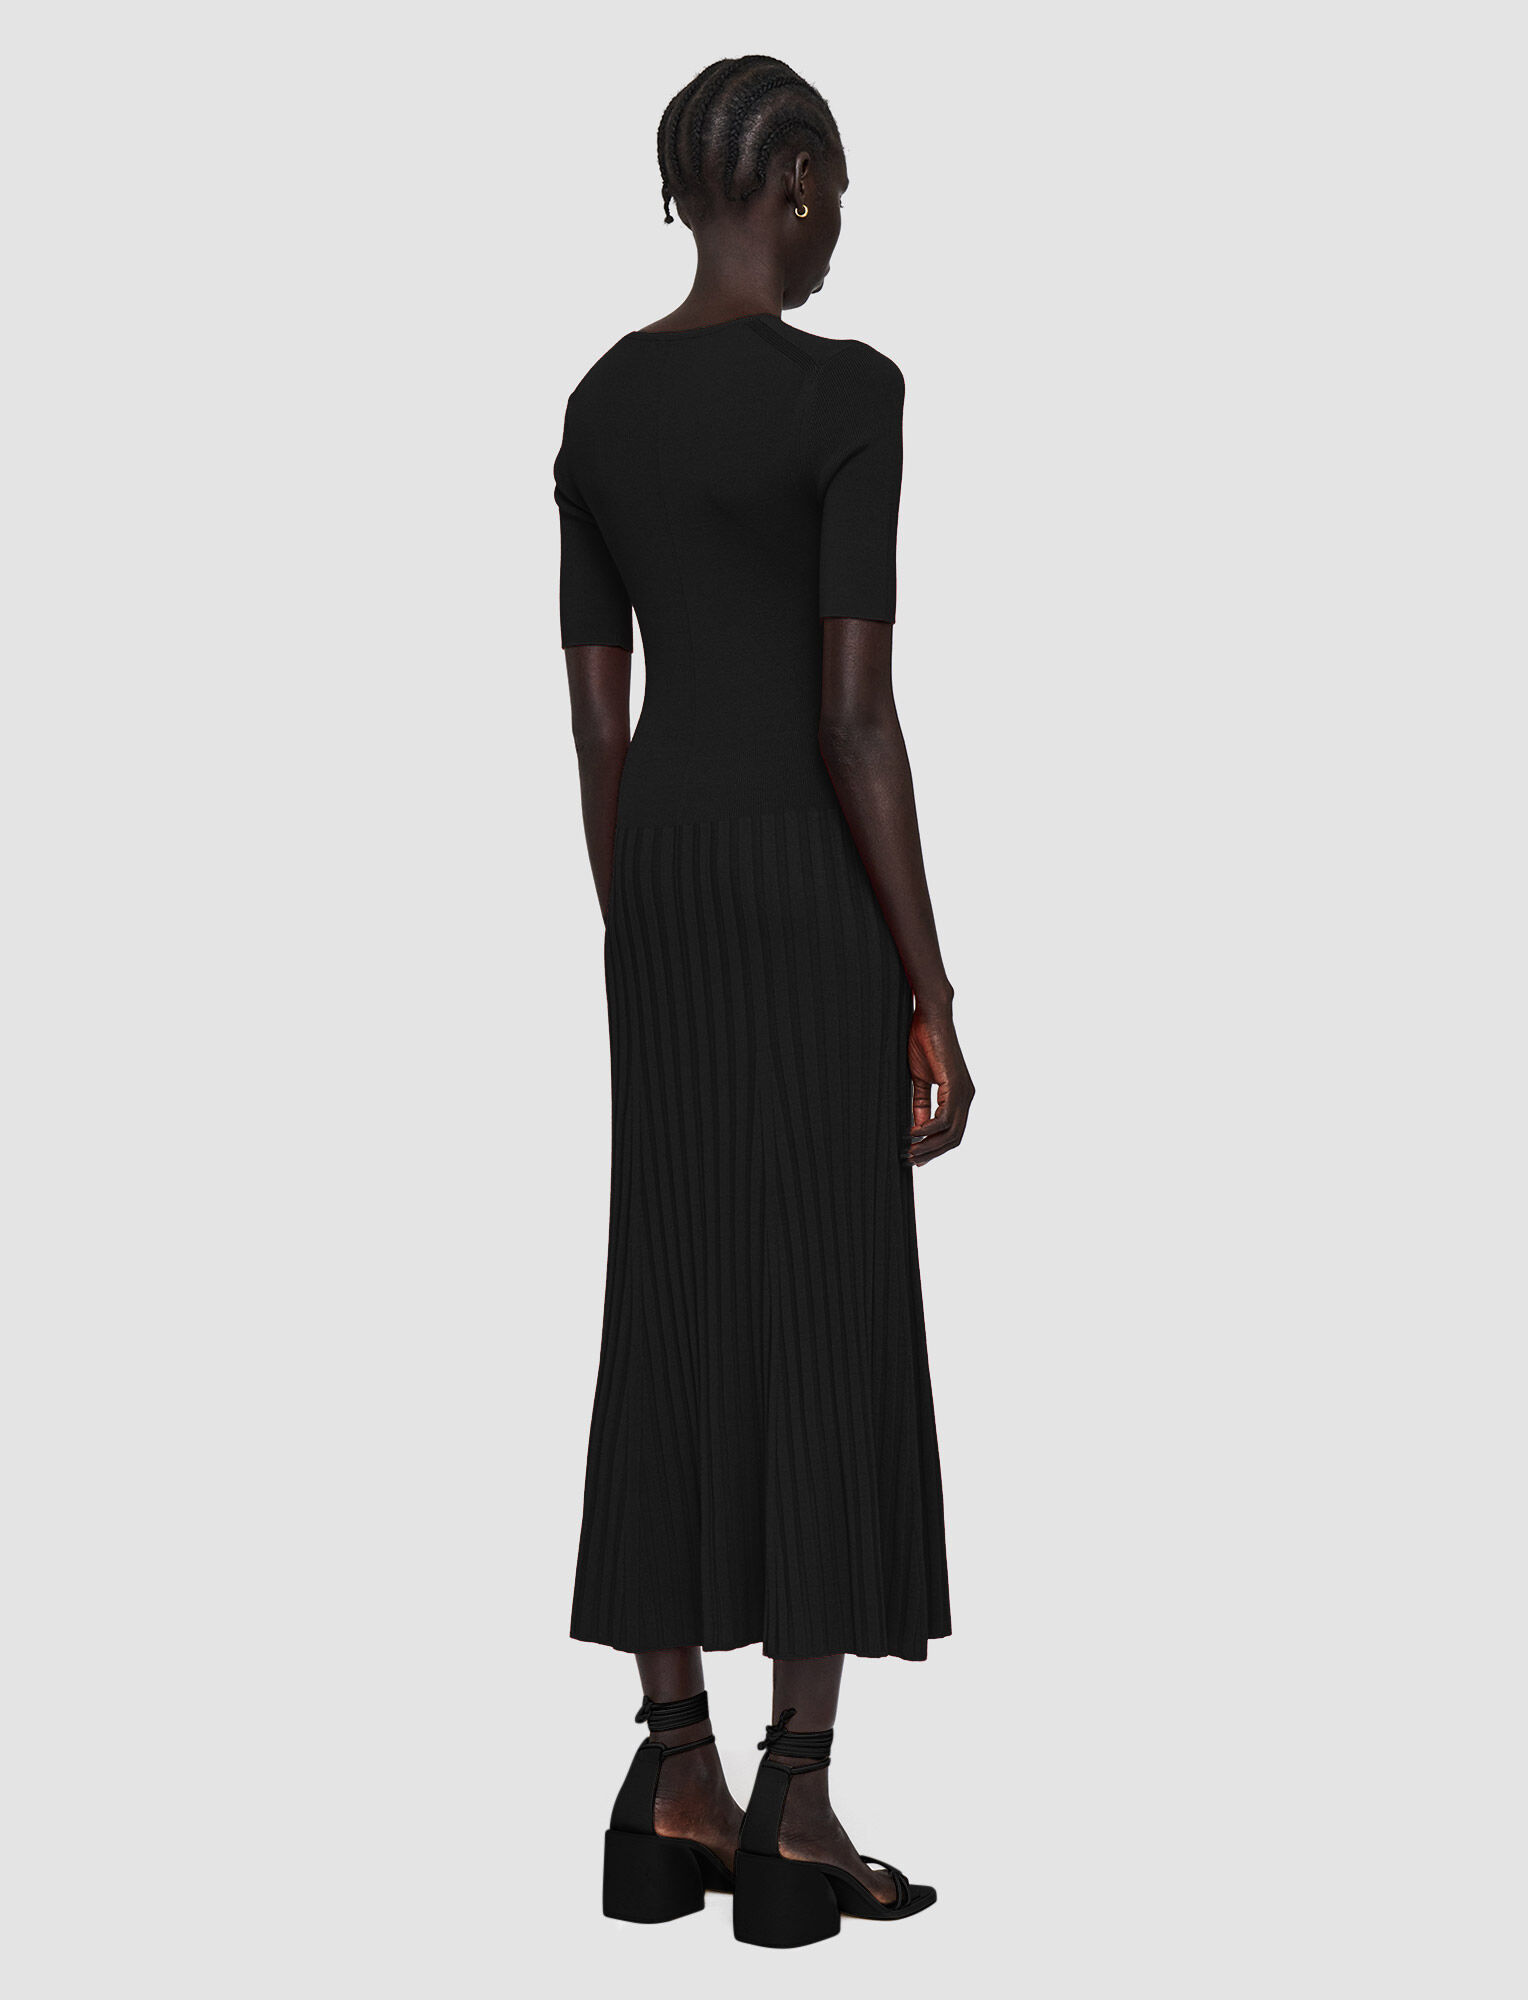 Joseph, Satiny Rib Knitted Dress, in Black